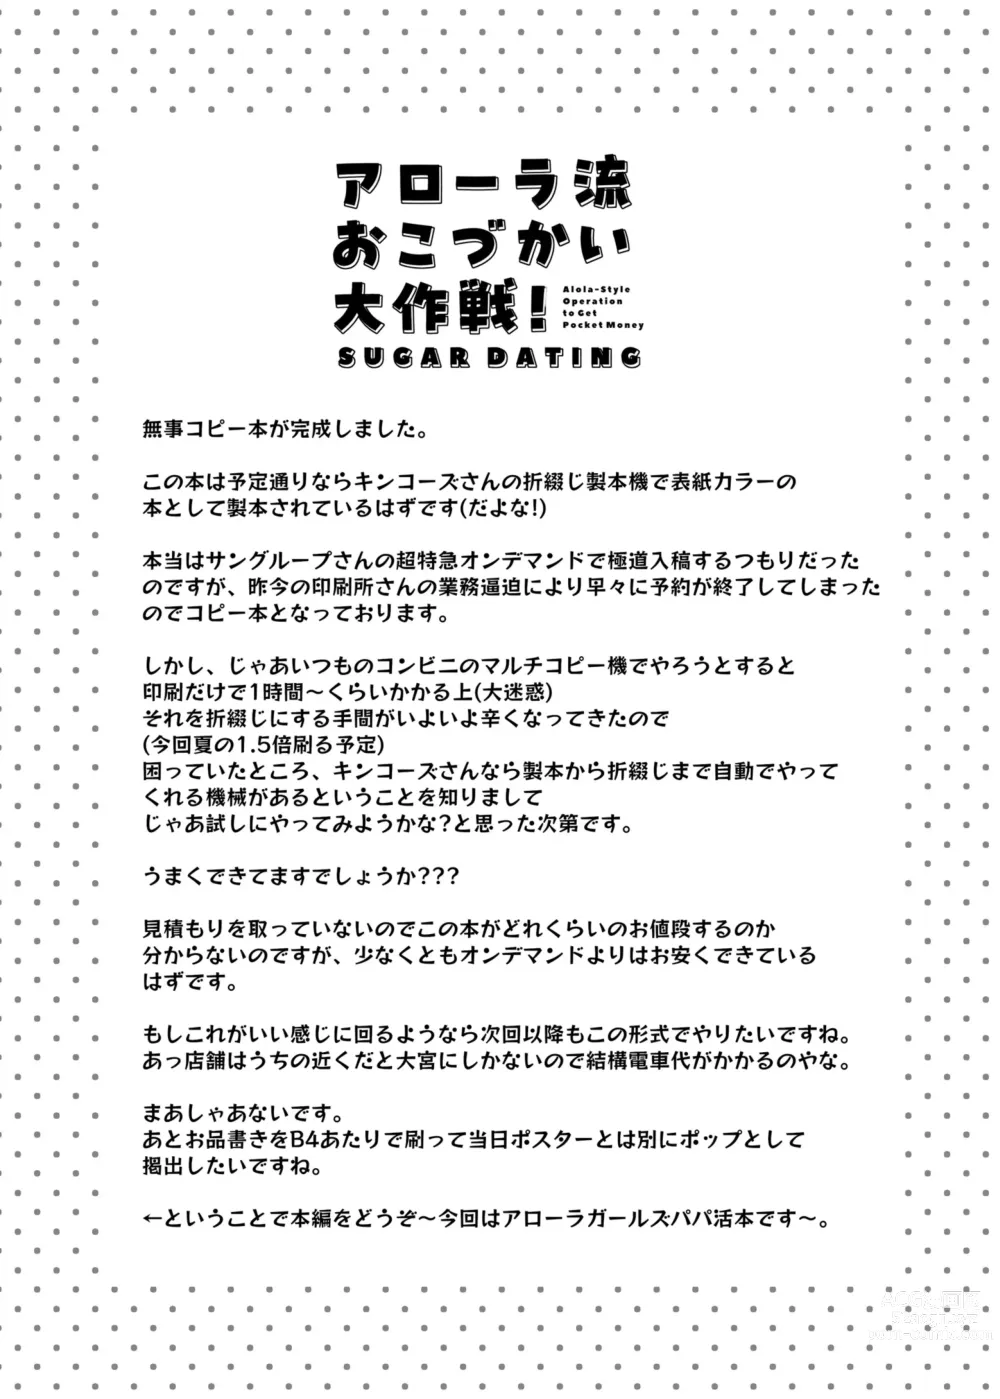 Page 4 of doujinshi Alola Okozukai Daisakusen! - Alola-Style Operation to get Pocket Money Sugar Dating